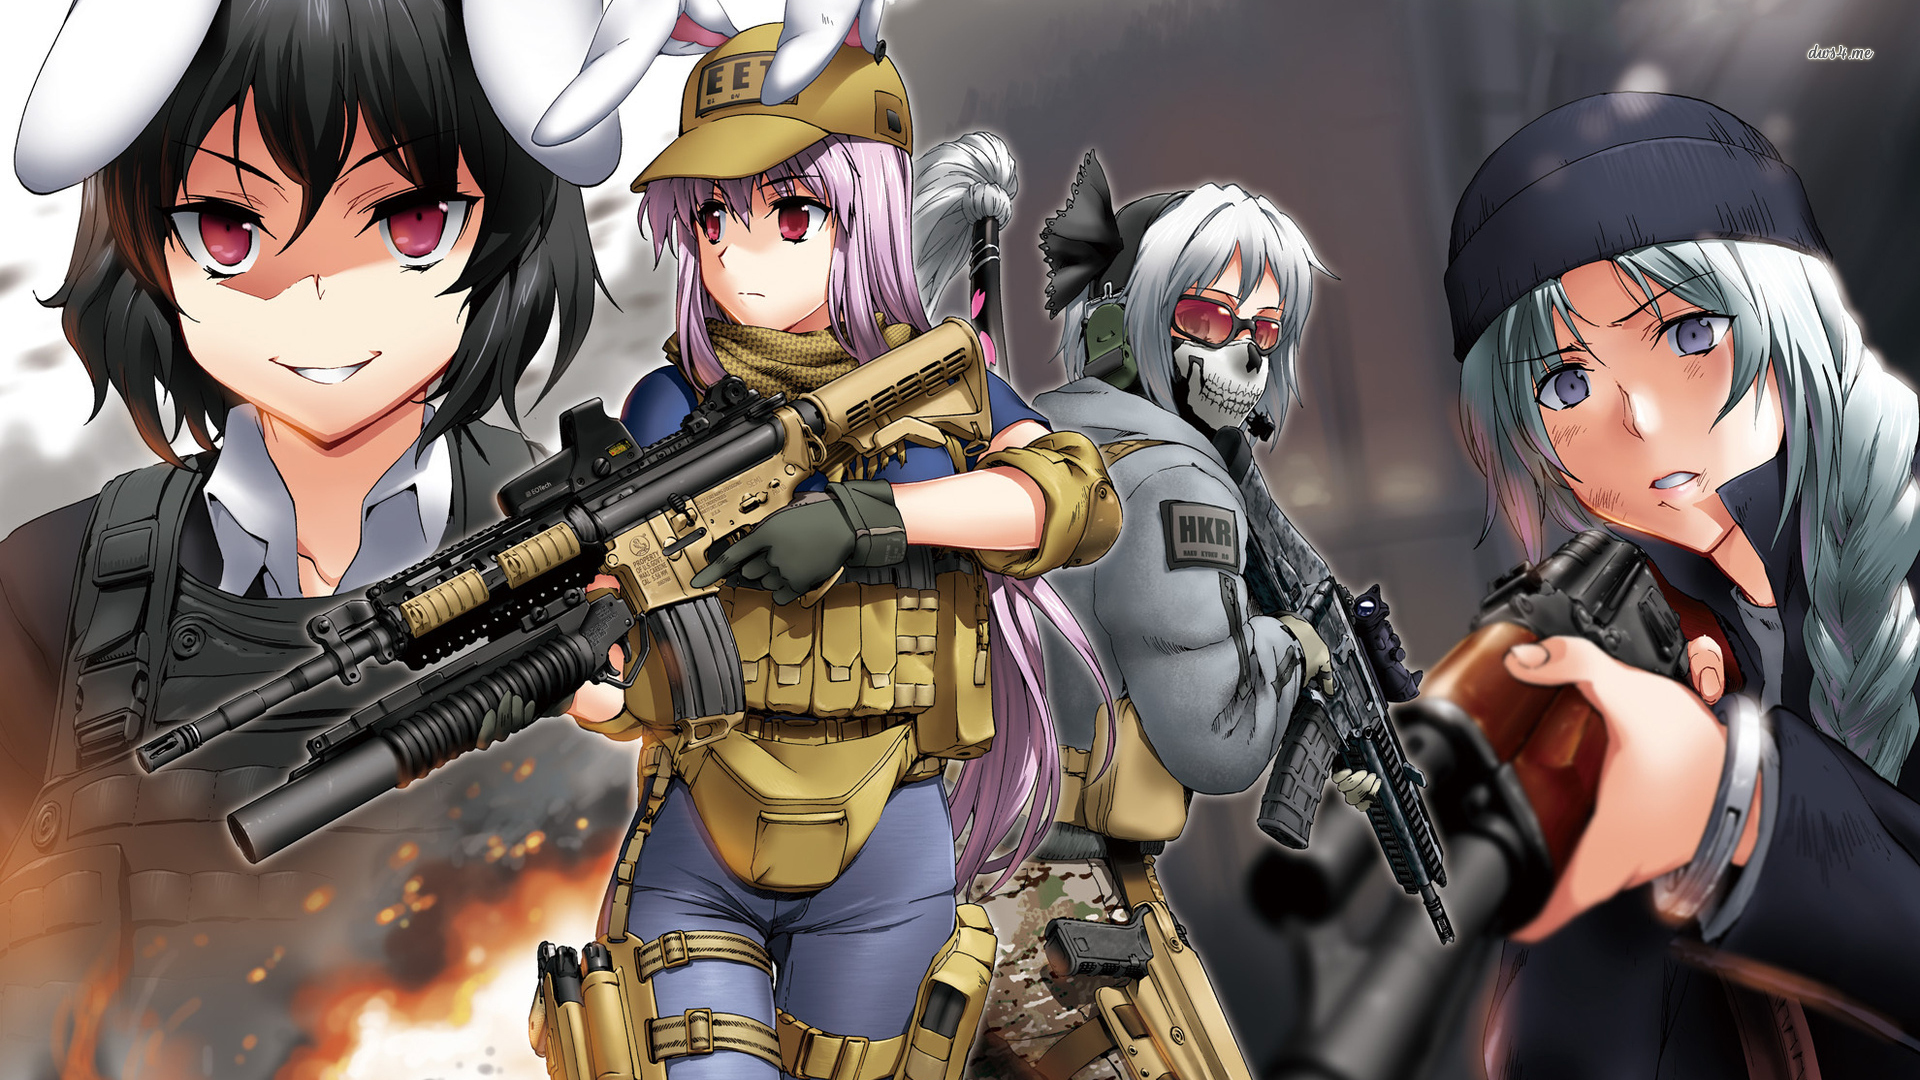 Girls With Guns Wallpaper Anime Wallpapers Daftsex Hd